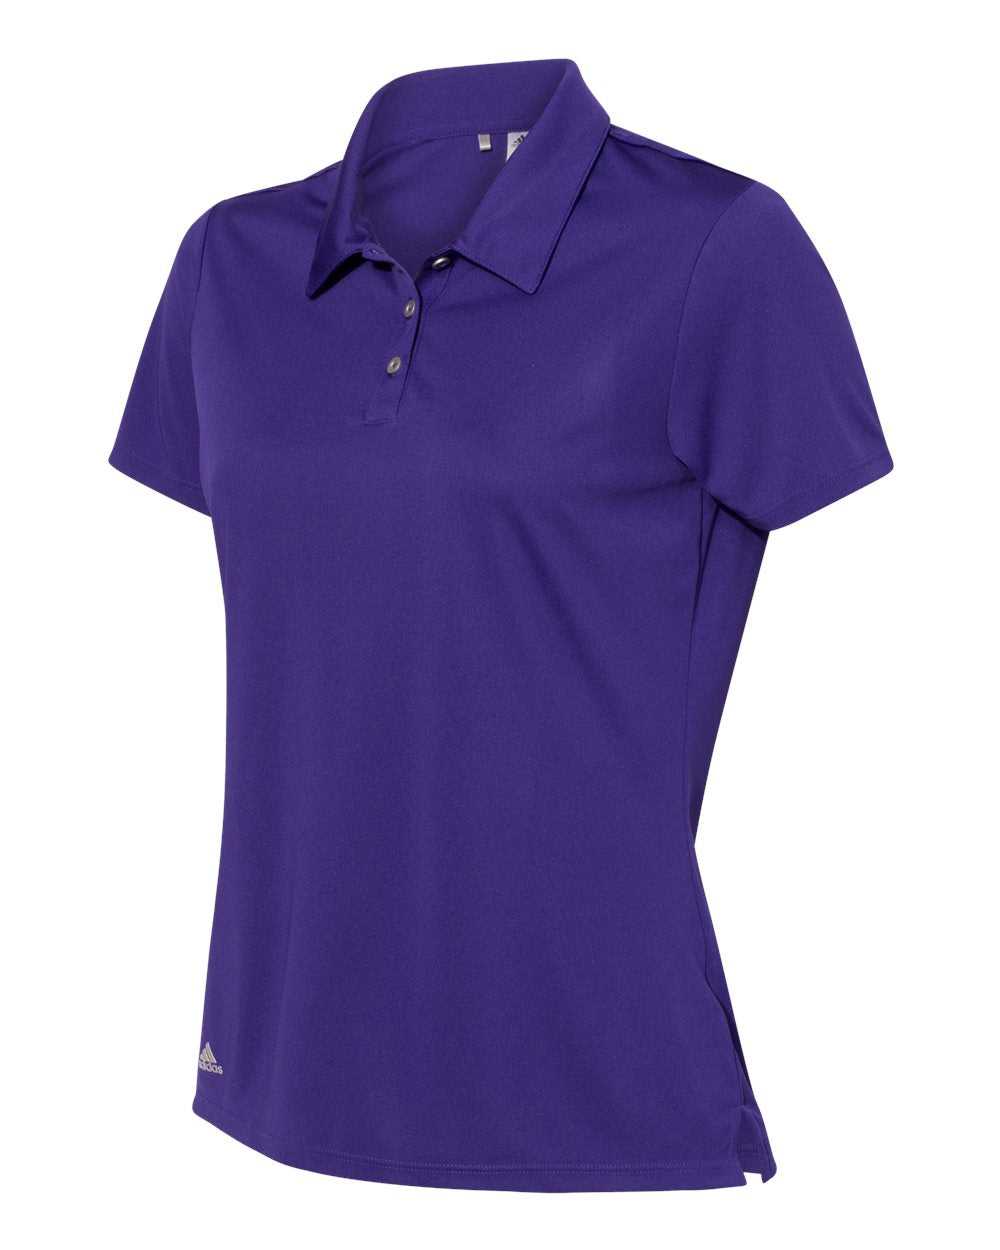 Adidas A231 Women's Performance Sport Shirt - Collegiate Purple - HIT a Double